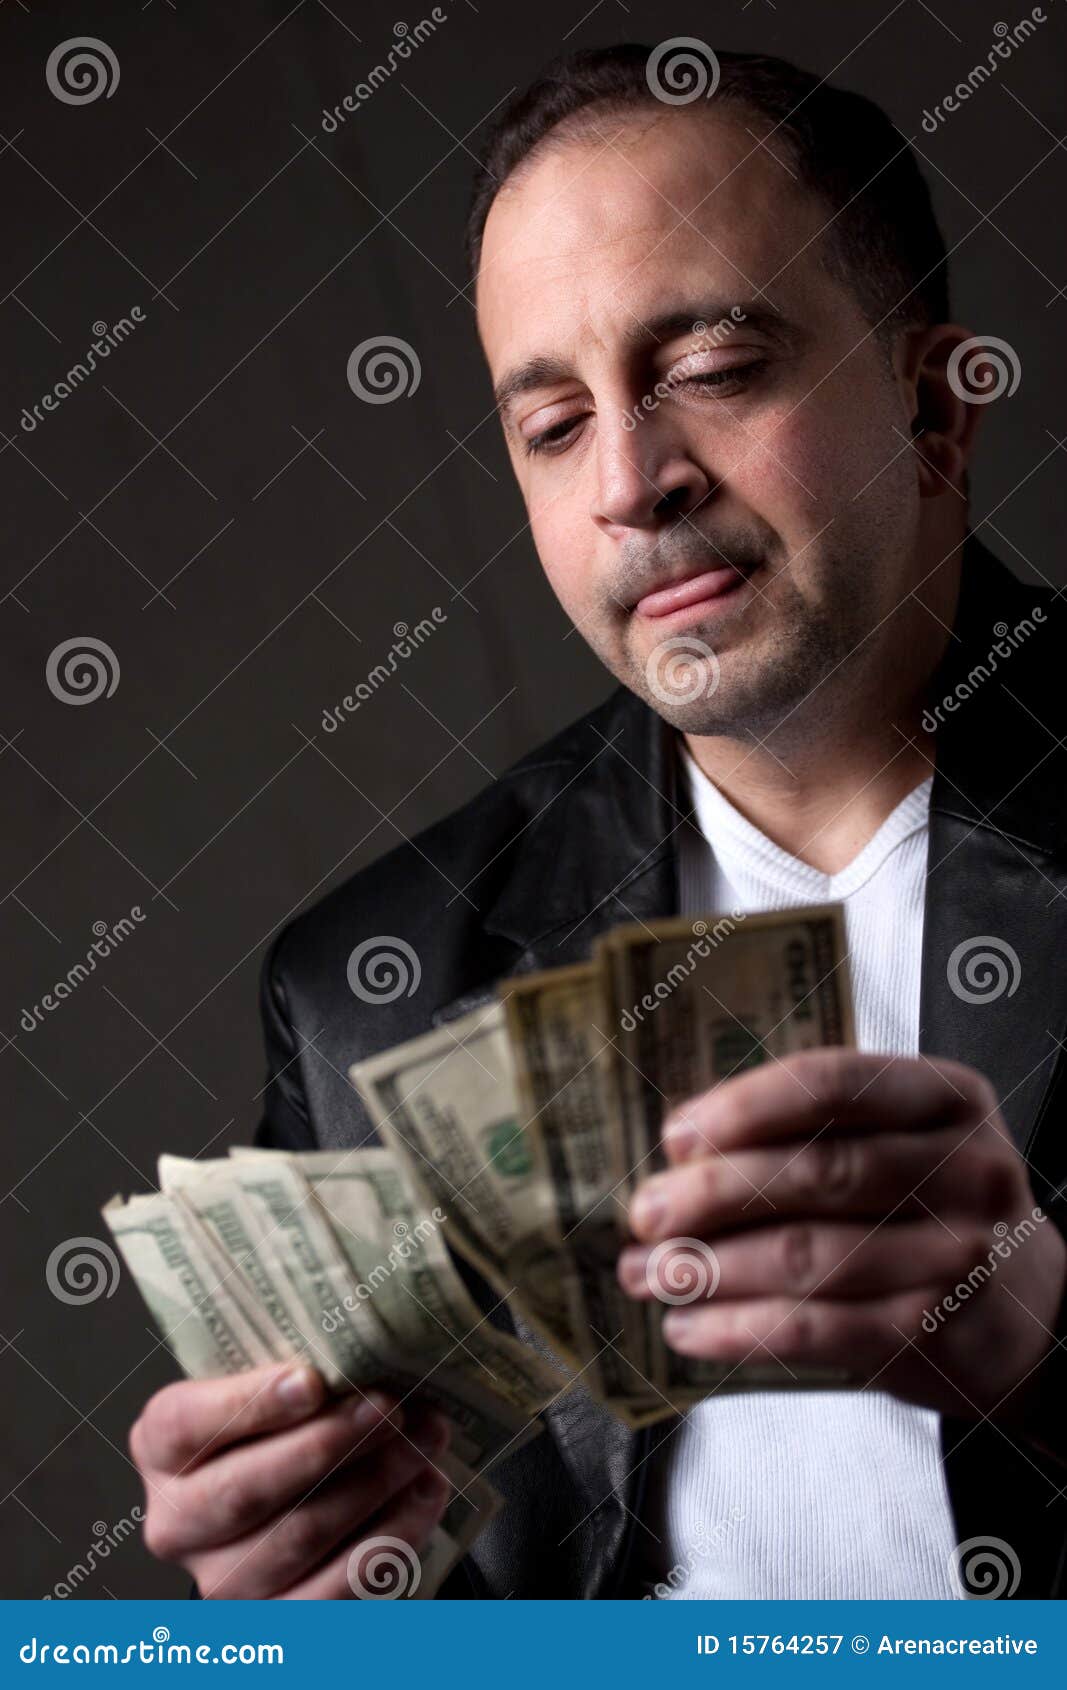 Man Counting Money stock image. Image of money, businessman - 15764257